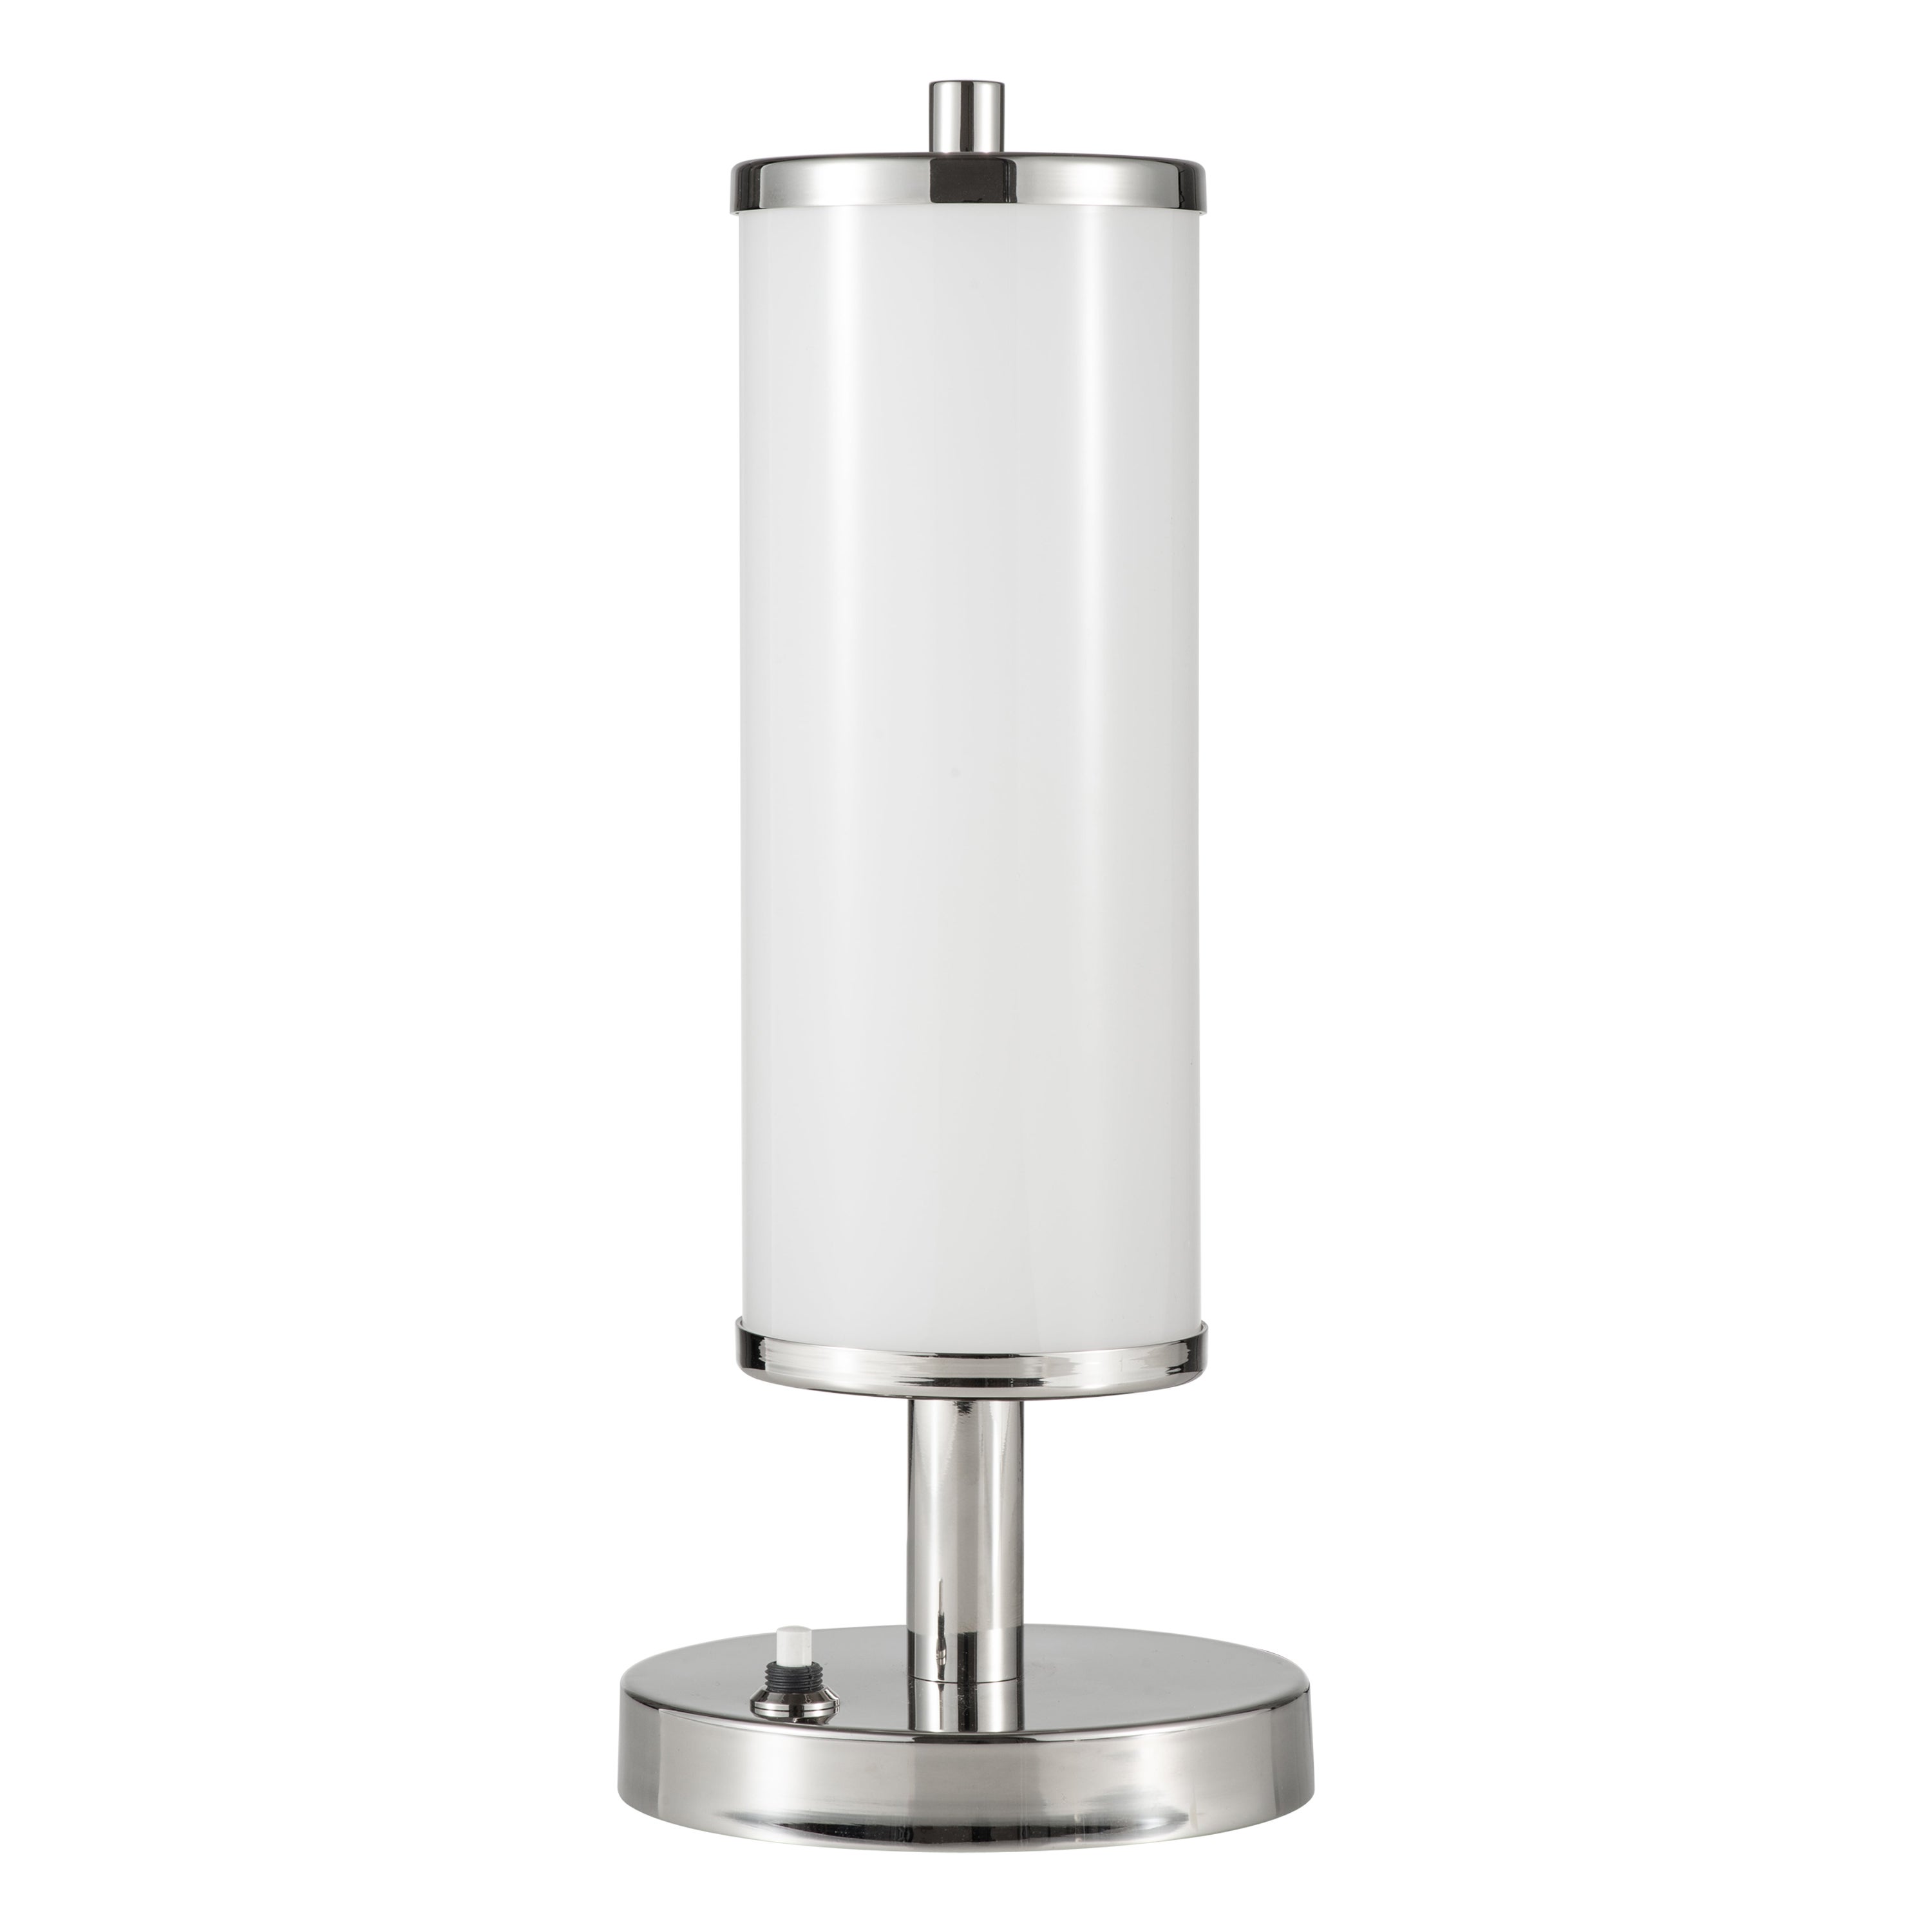 Bauhaus Modernist table lamp manufactured by RETROLUMEN-BERLIN